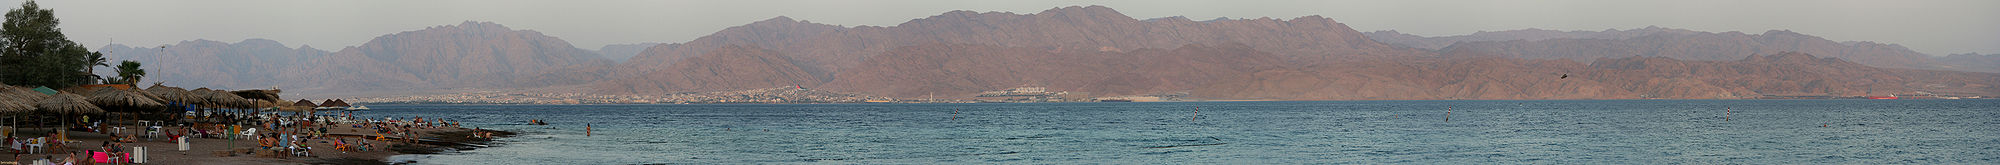 Панорамный вид Красного моря с Эйлата (с Эйлатским (Акабским) заливом на заднем плане)